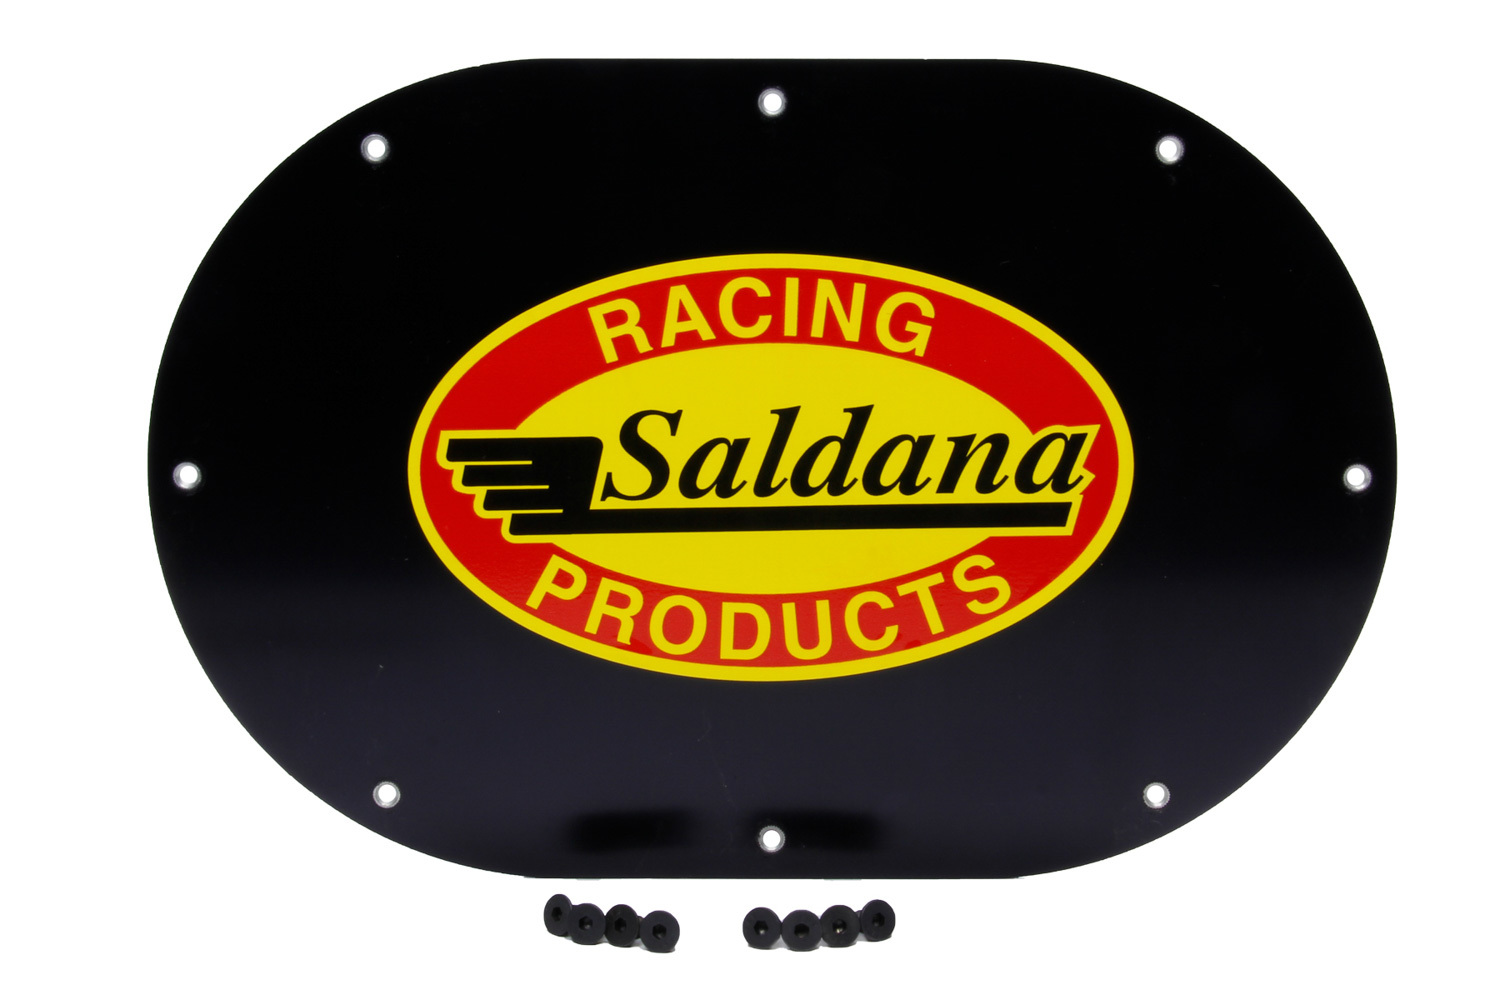 Saldana Racing Products SAC-002 Tail Tank Cover Plate, 6 x 10 in Oval, Aluminum, Black Anodized, Saldana Tail Tanks, Each